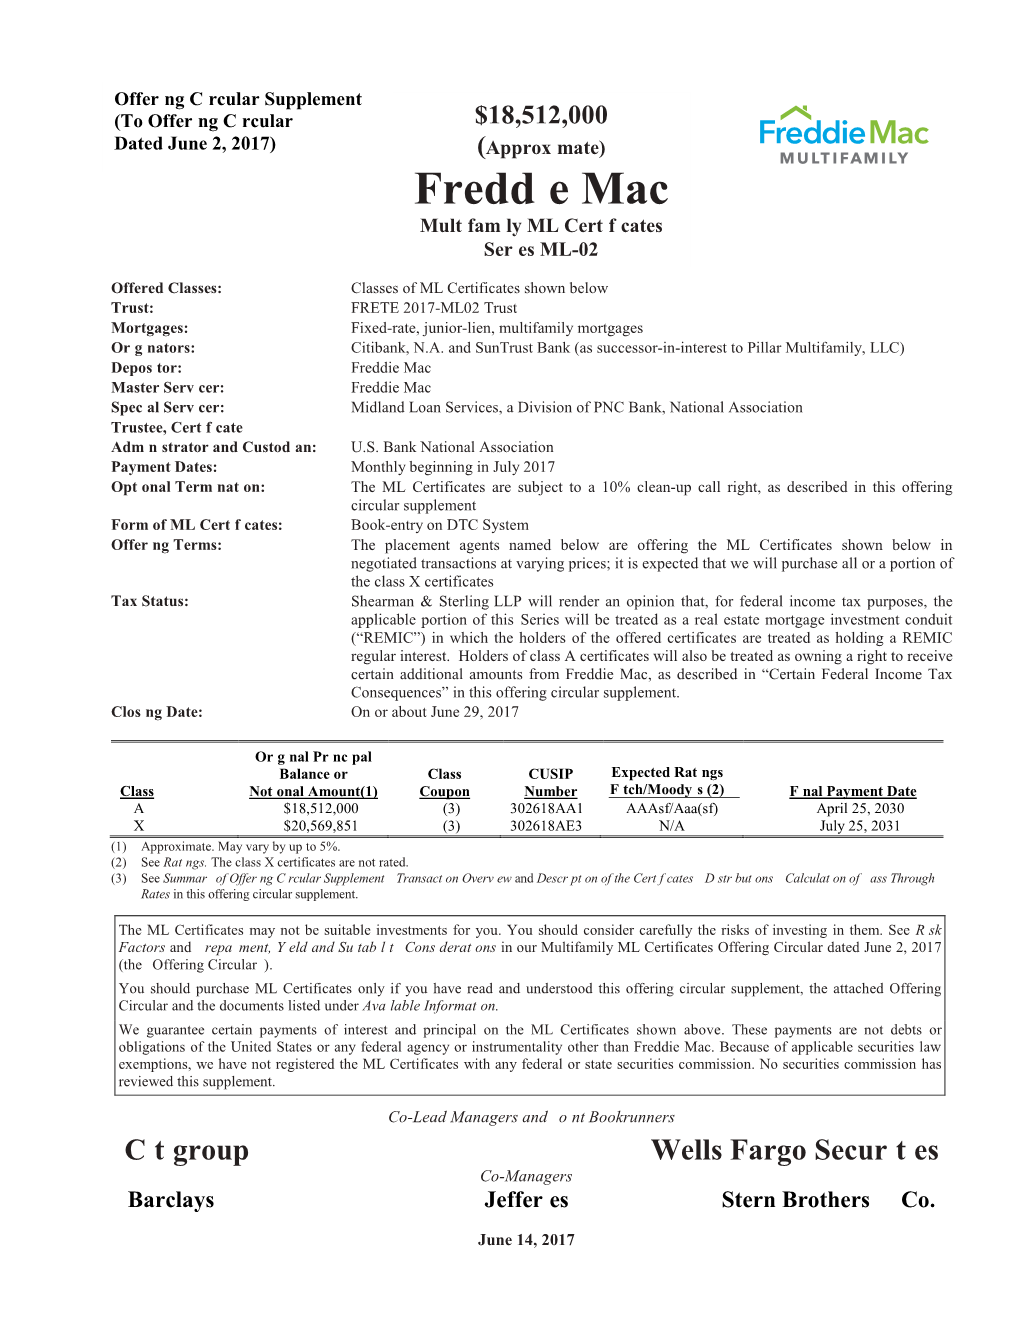 (Approximate) Freddie Mac Multifamily ML Certificates Series ML-02